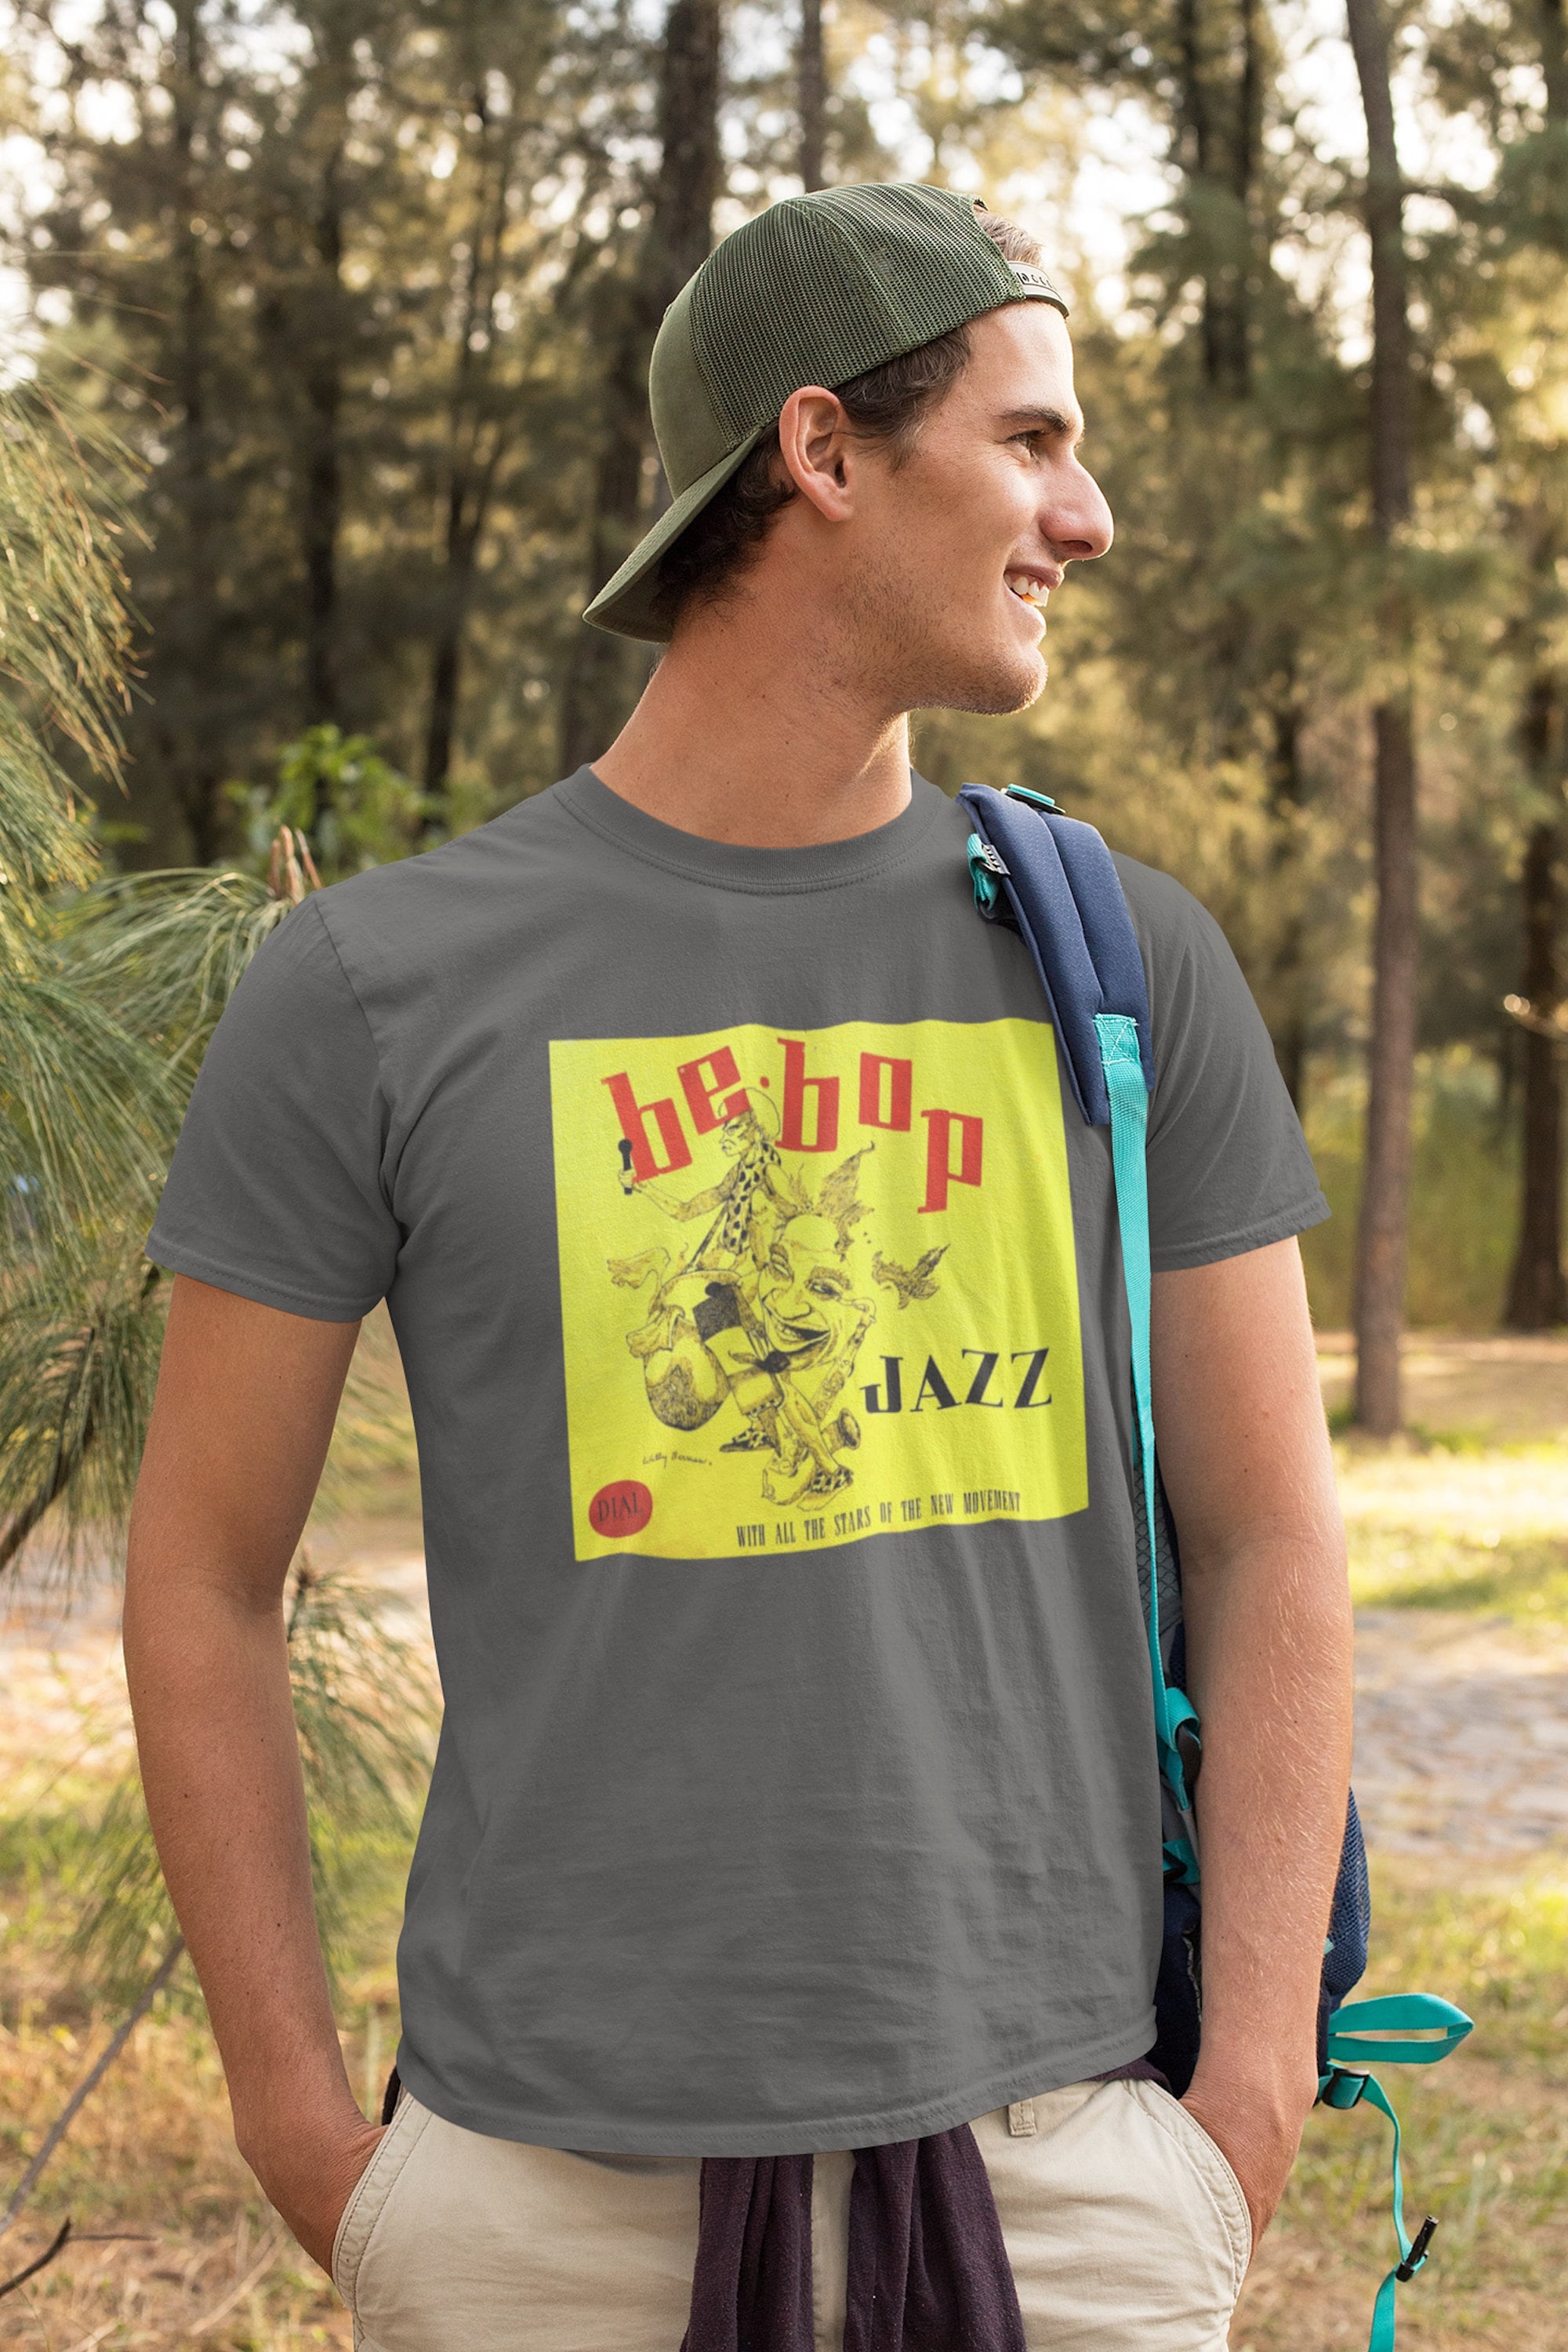 Vintage Band T Shirt for Men Jazz Art Band Tee Shirt Retro -